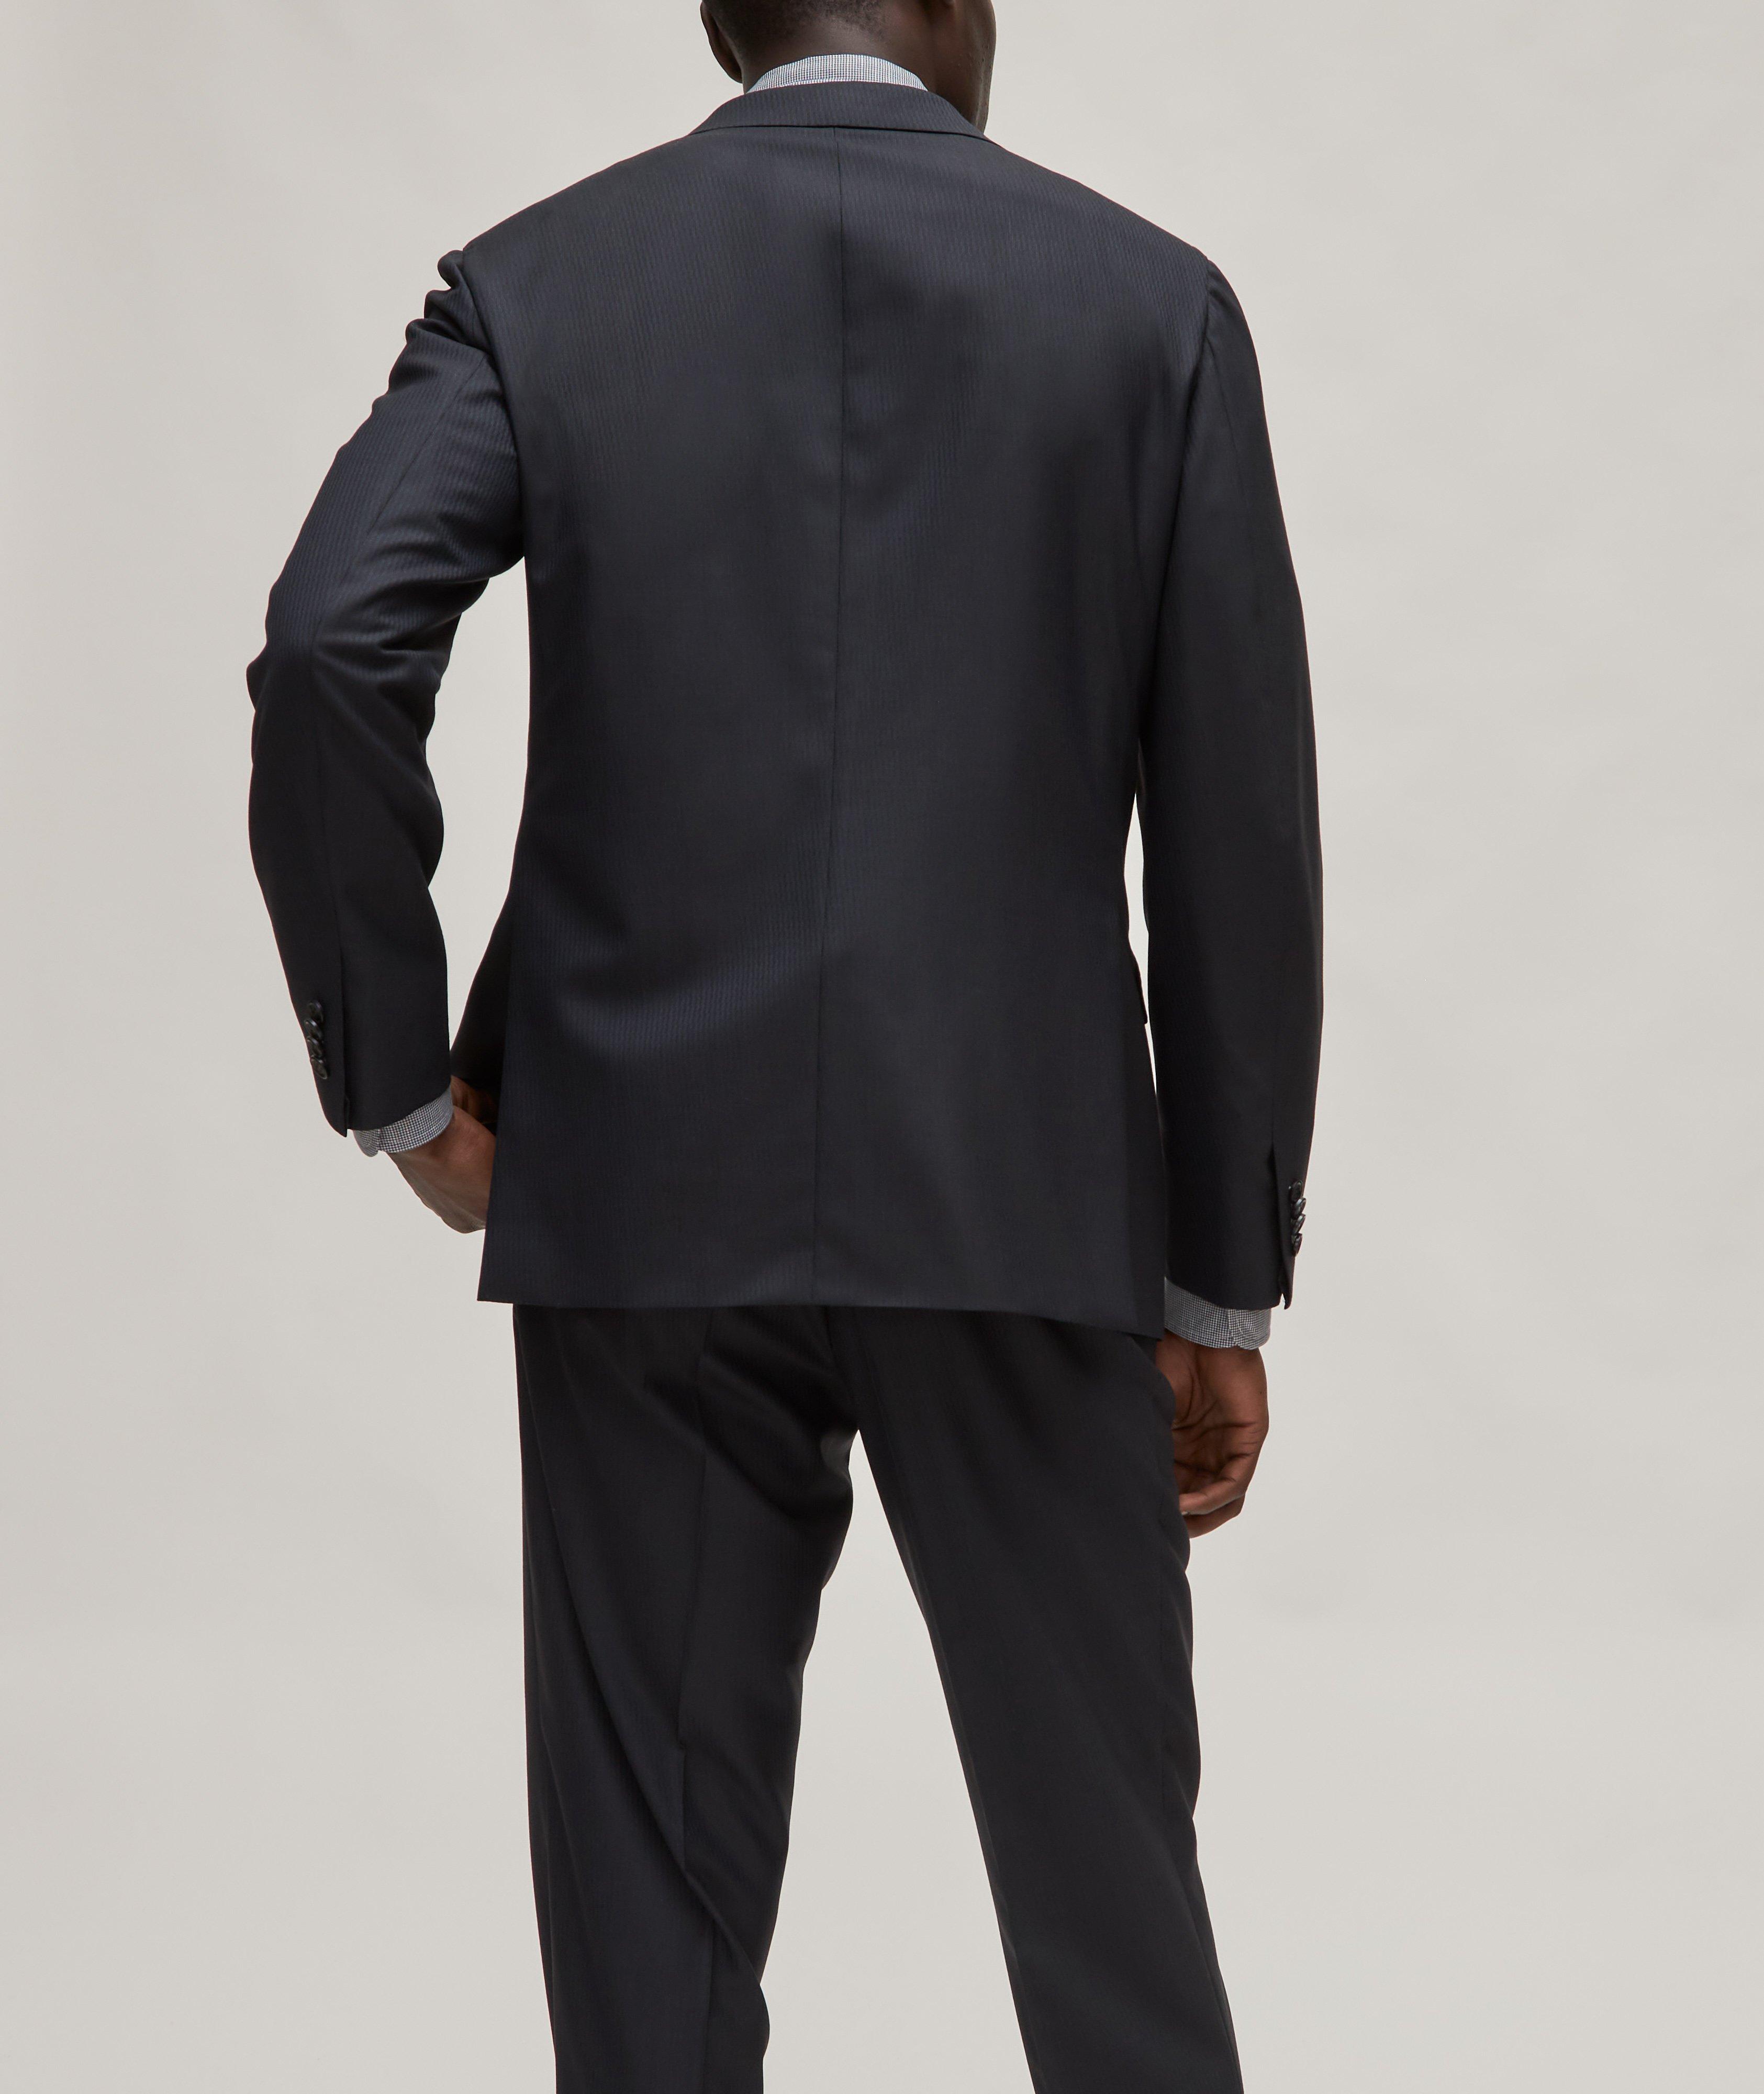 New Plume Jacquard Virgin Wool Suit image 2